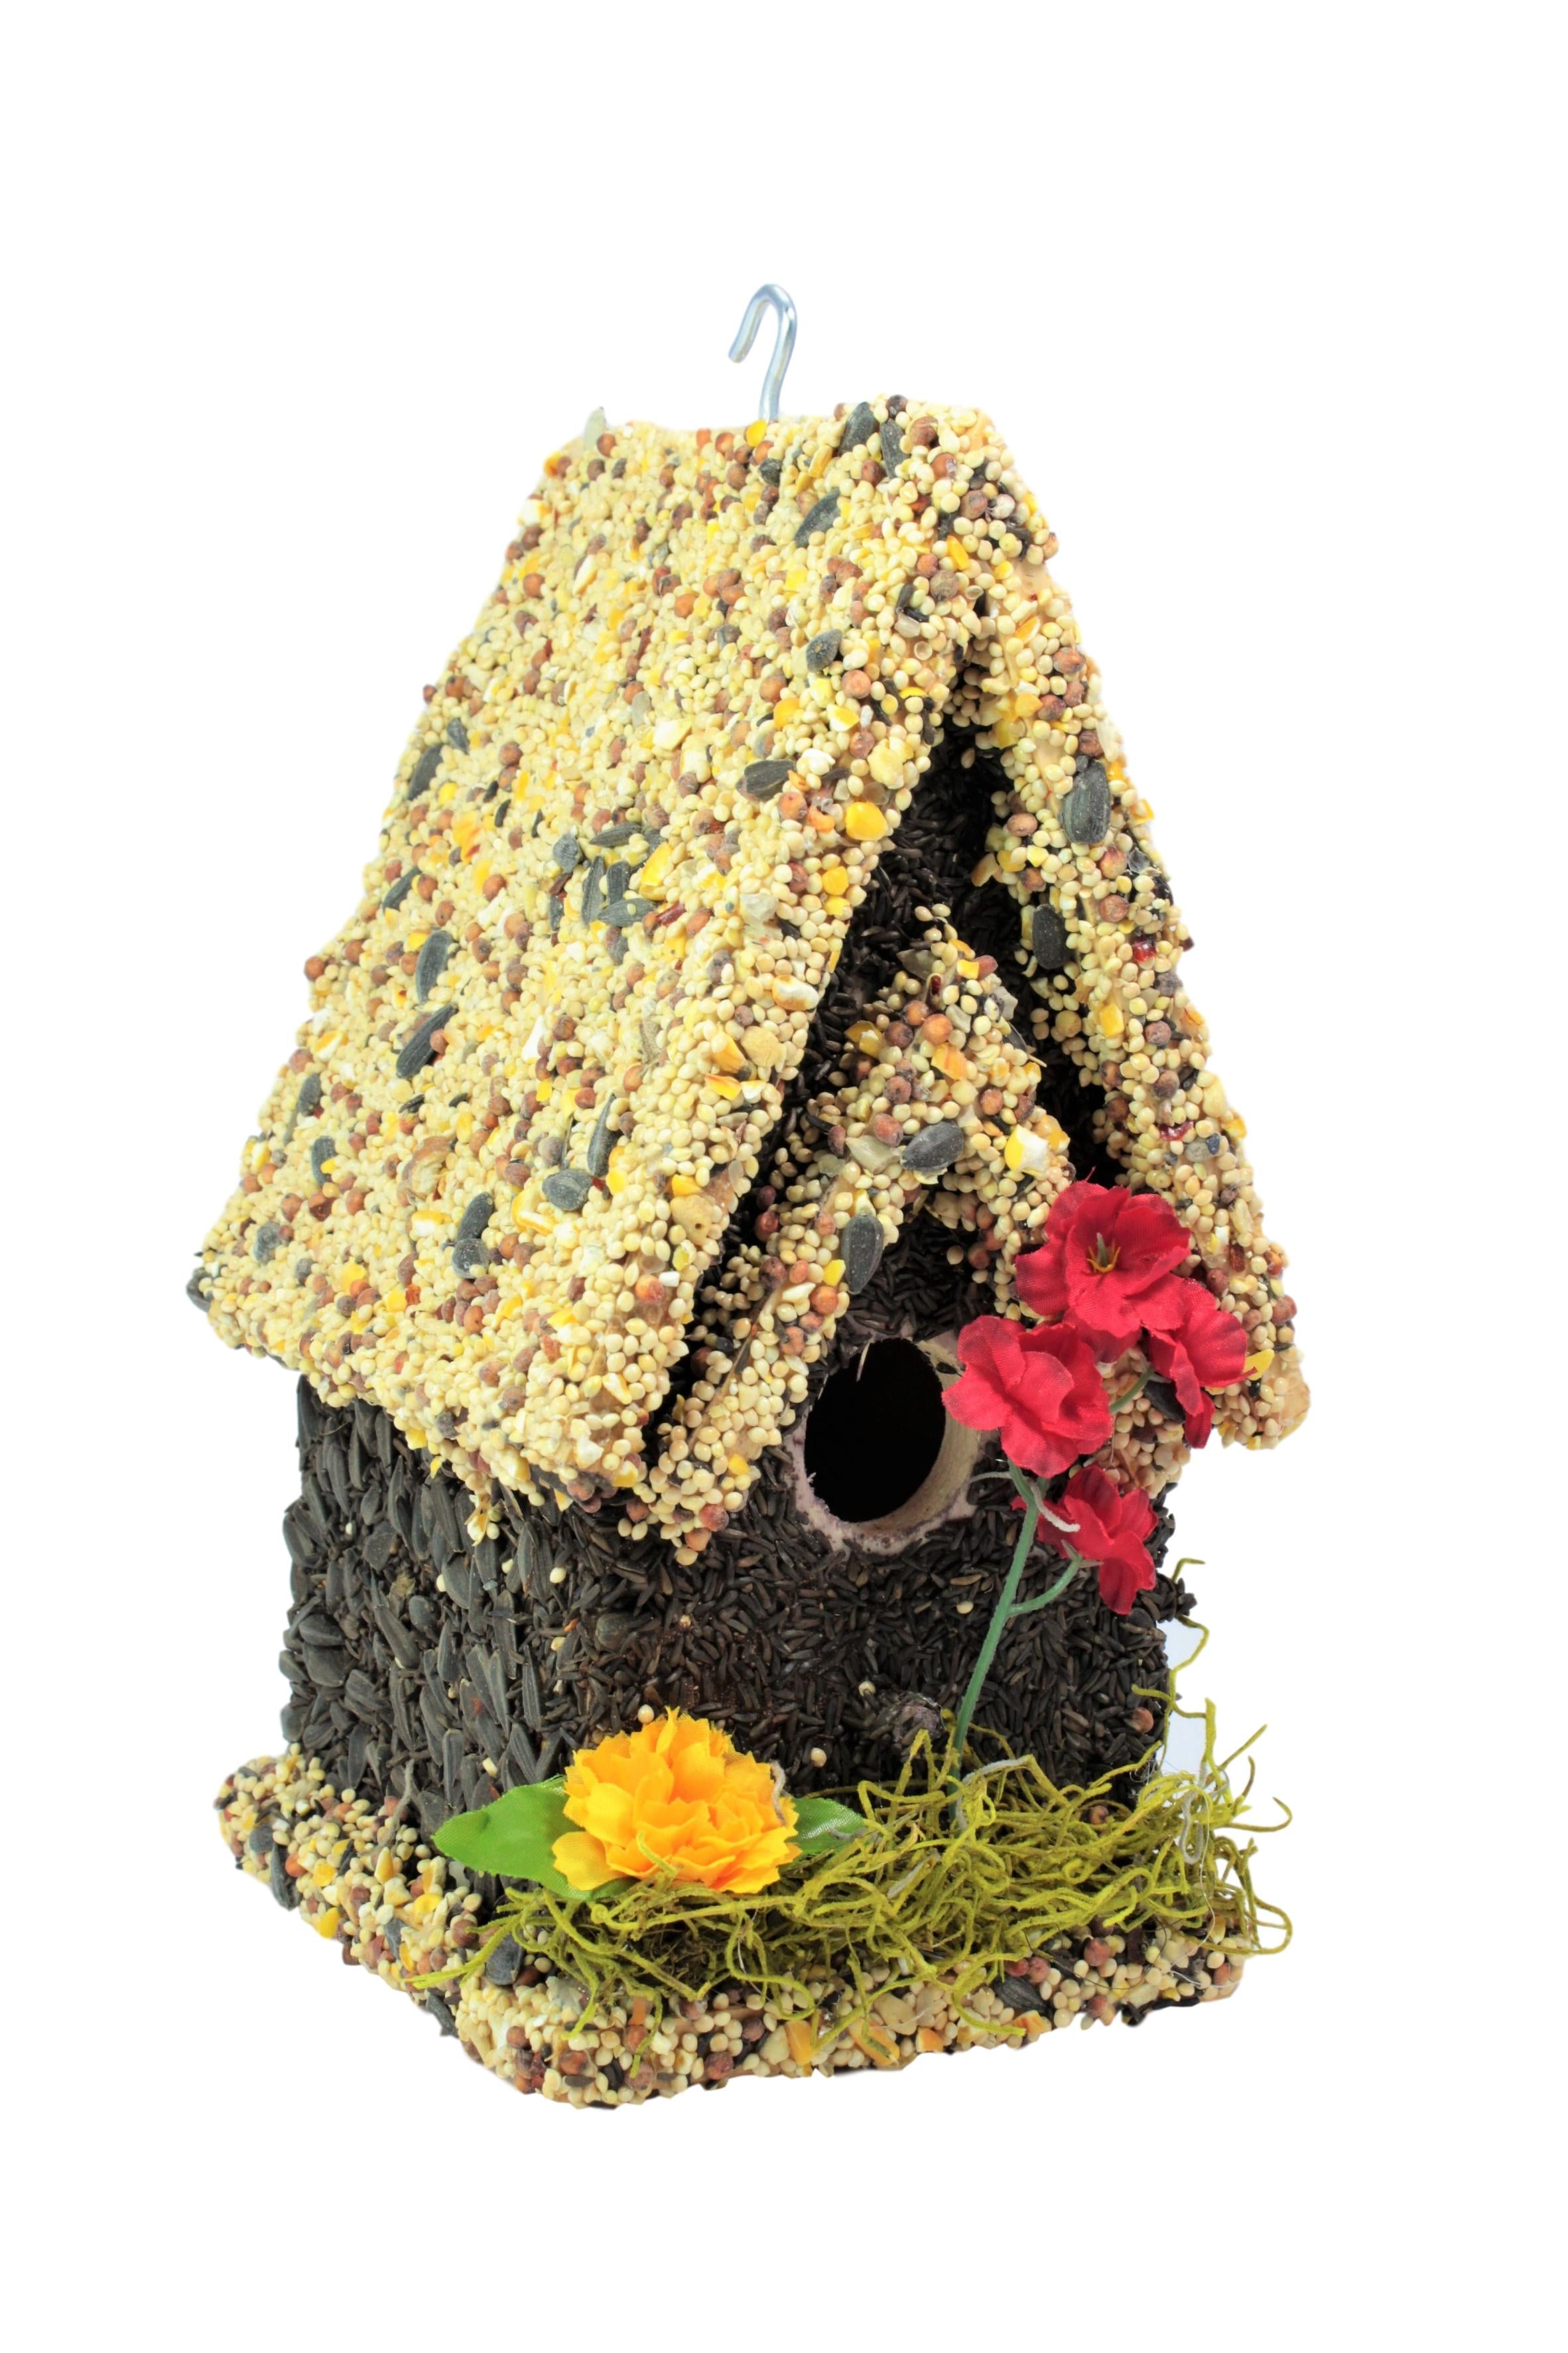 Edible Bird Feeder - Light Roof Tall Birdhouse